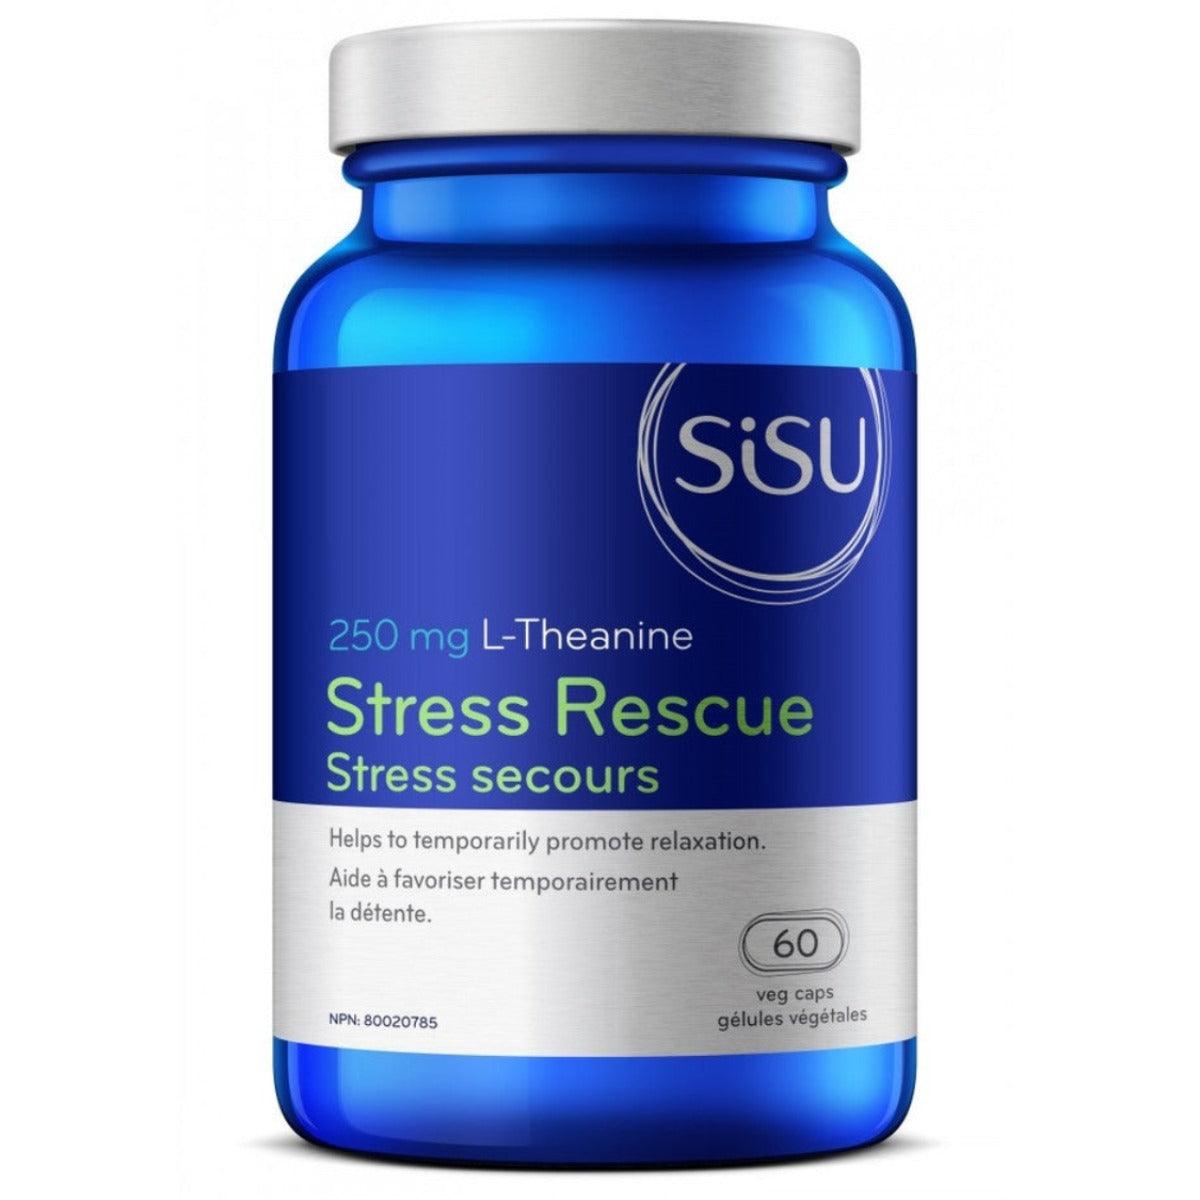 SISU Stress Rescue 250mg 60 c Supplements - Stress at Village Vitamin Store